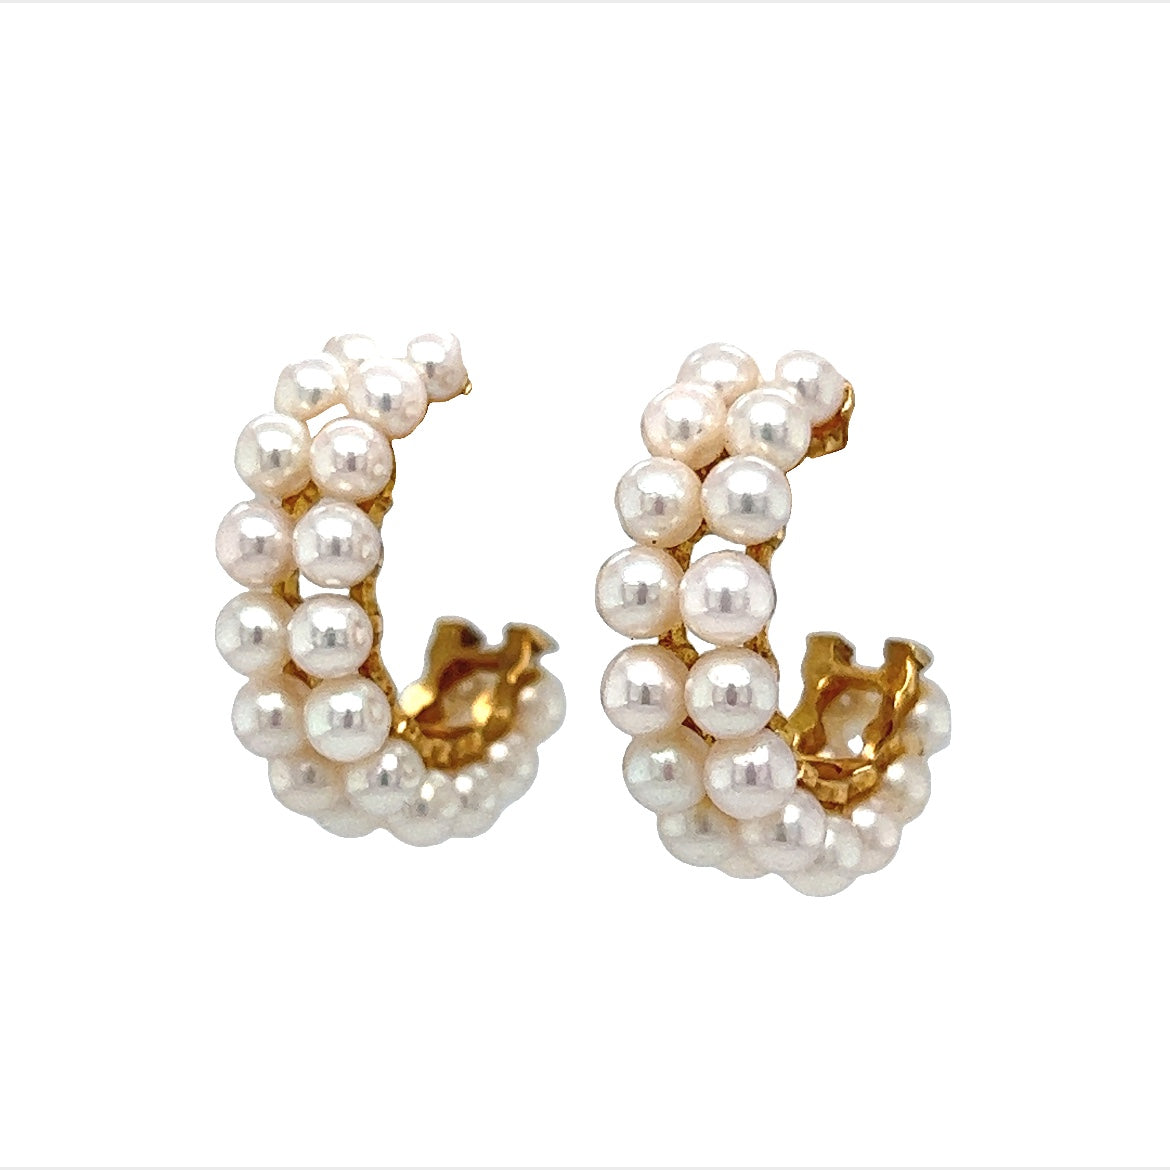 Mikimoto Pearl Hoop Earrings in 14k Yellow Gold